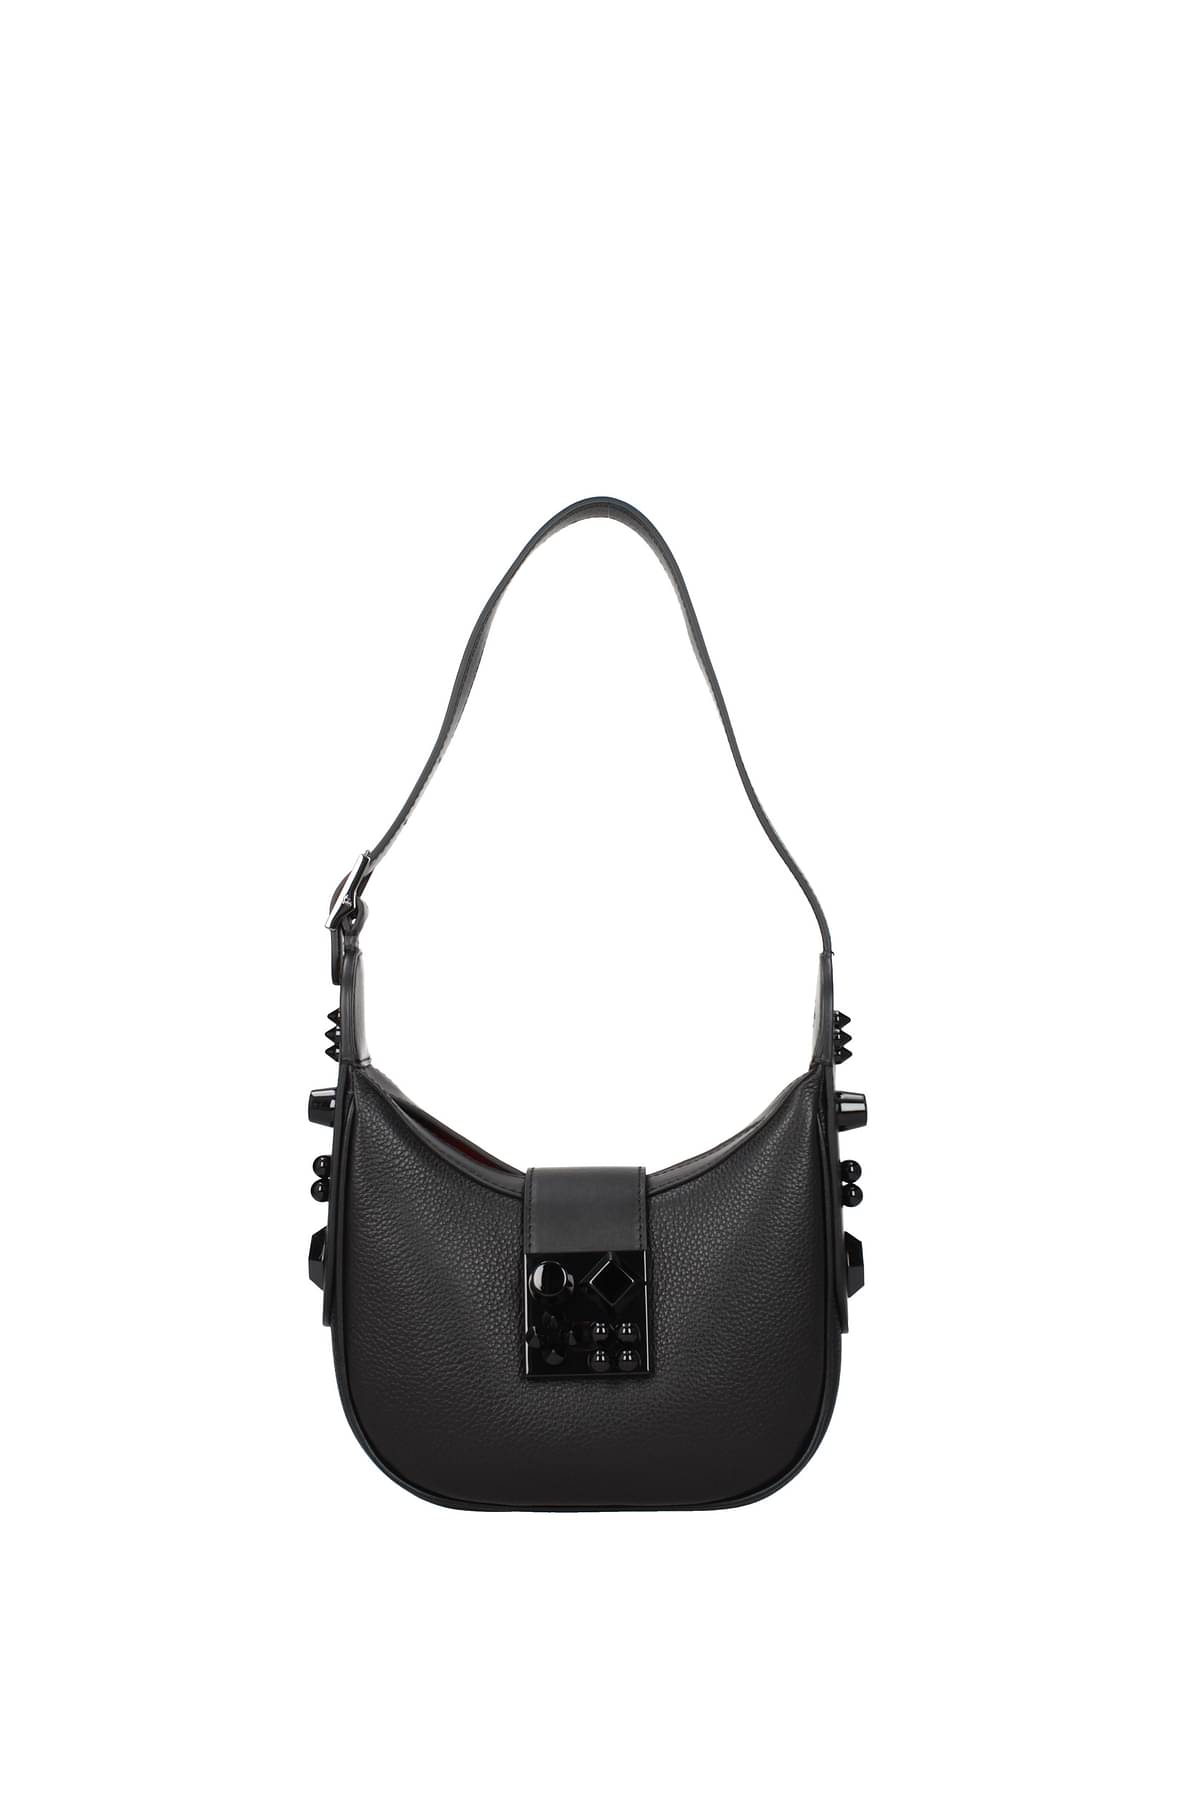 Louboutin Shoulder bags carasky Women 1225182CM53 Leather Black 761,25€